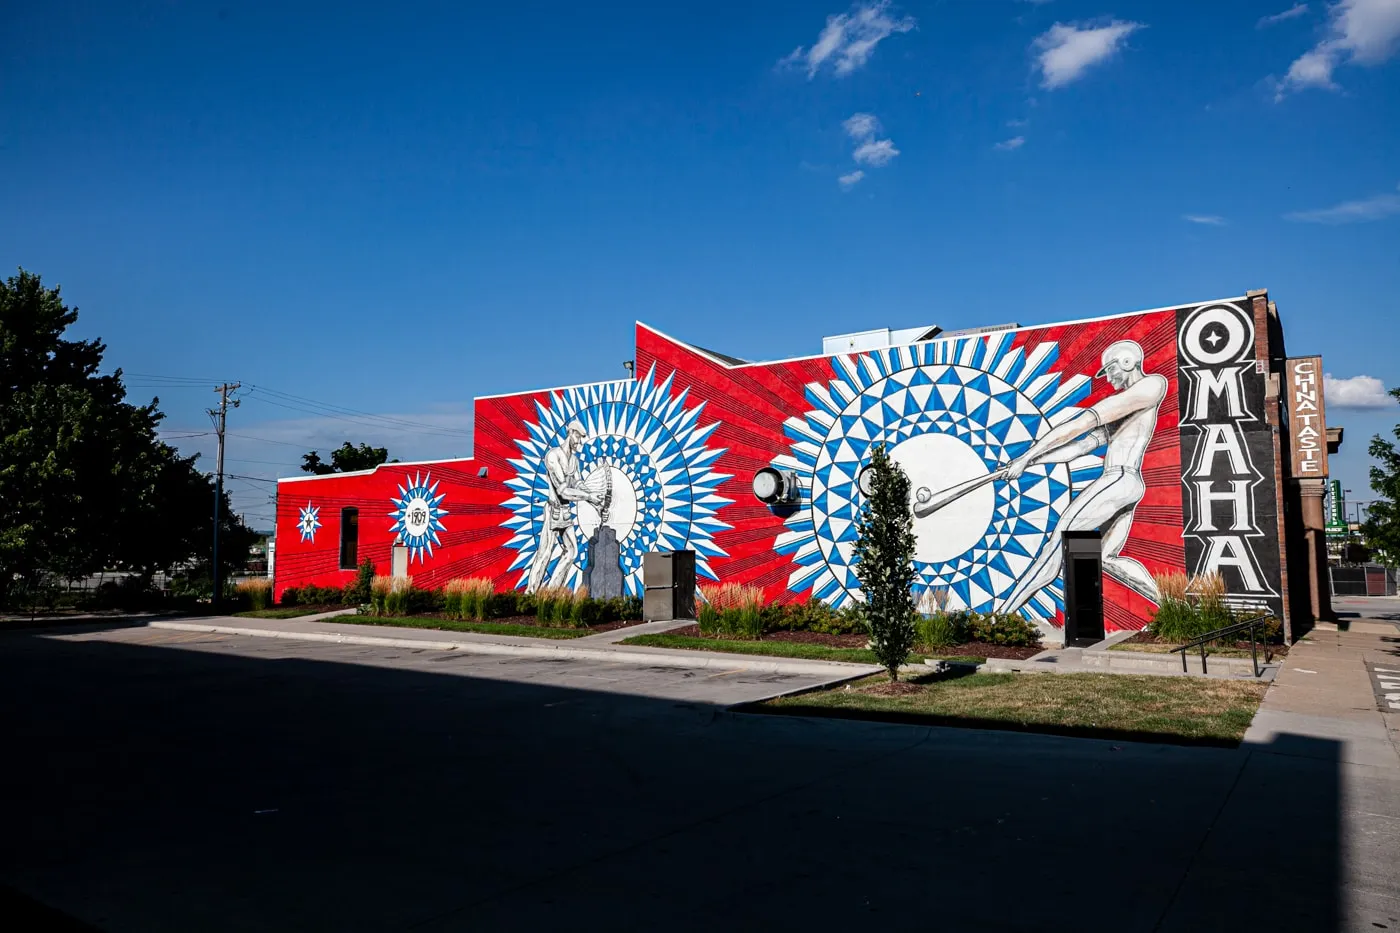 Justin Queal Home Run mural in Omaha, Nebraska - Omaha baseball mural street art